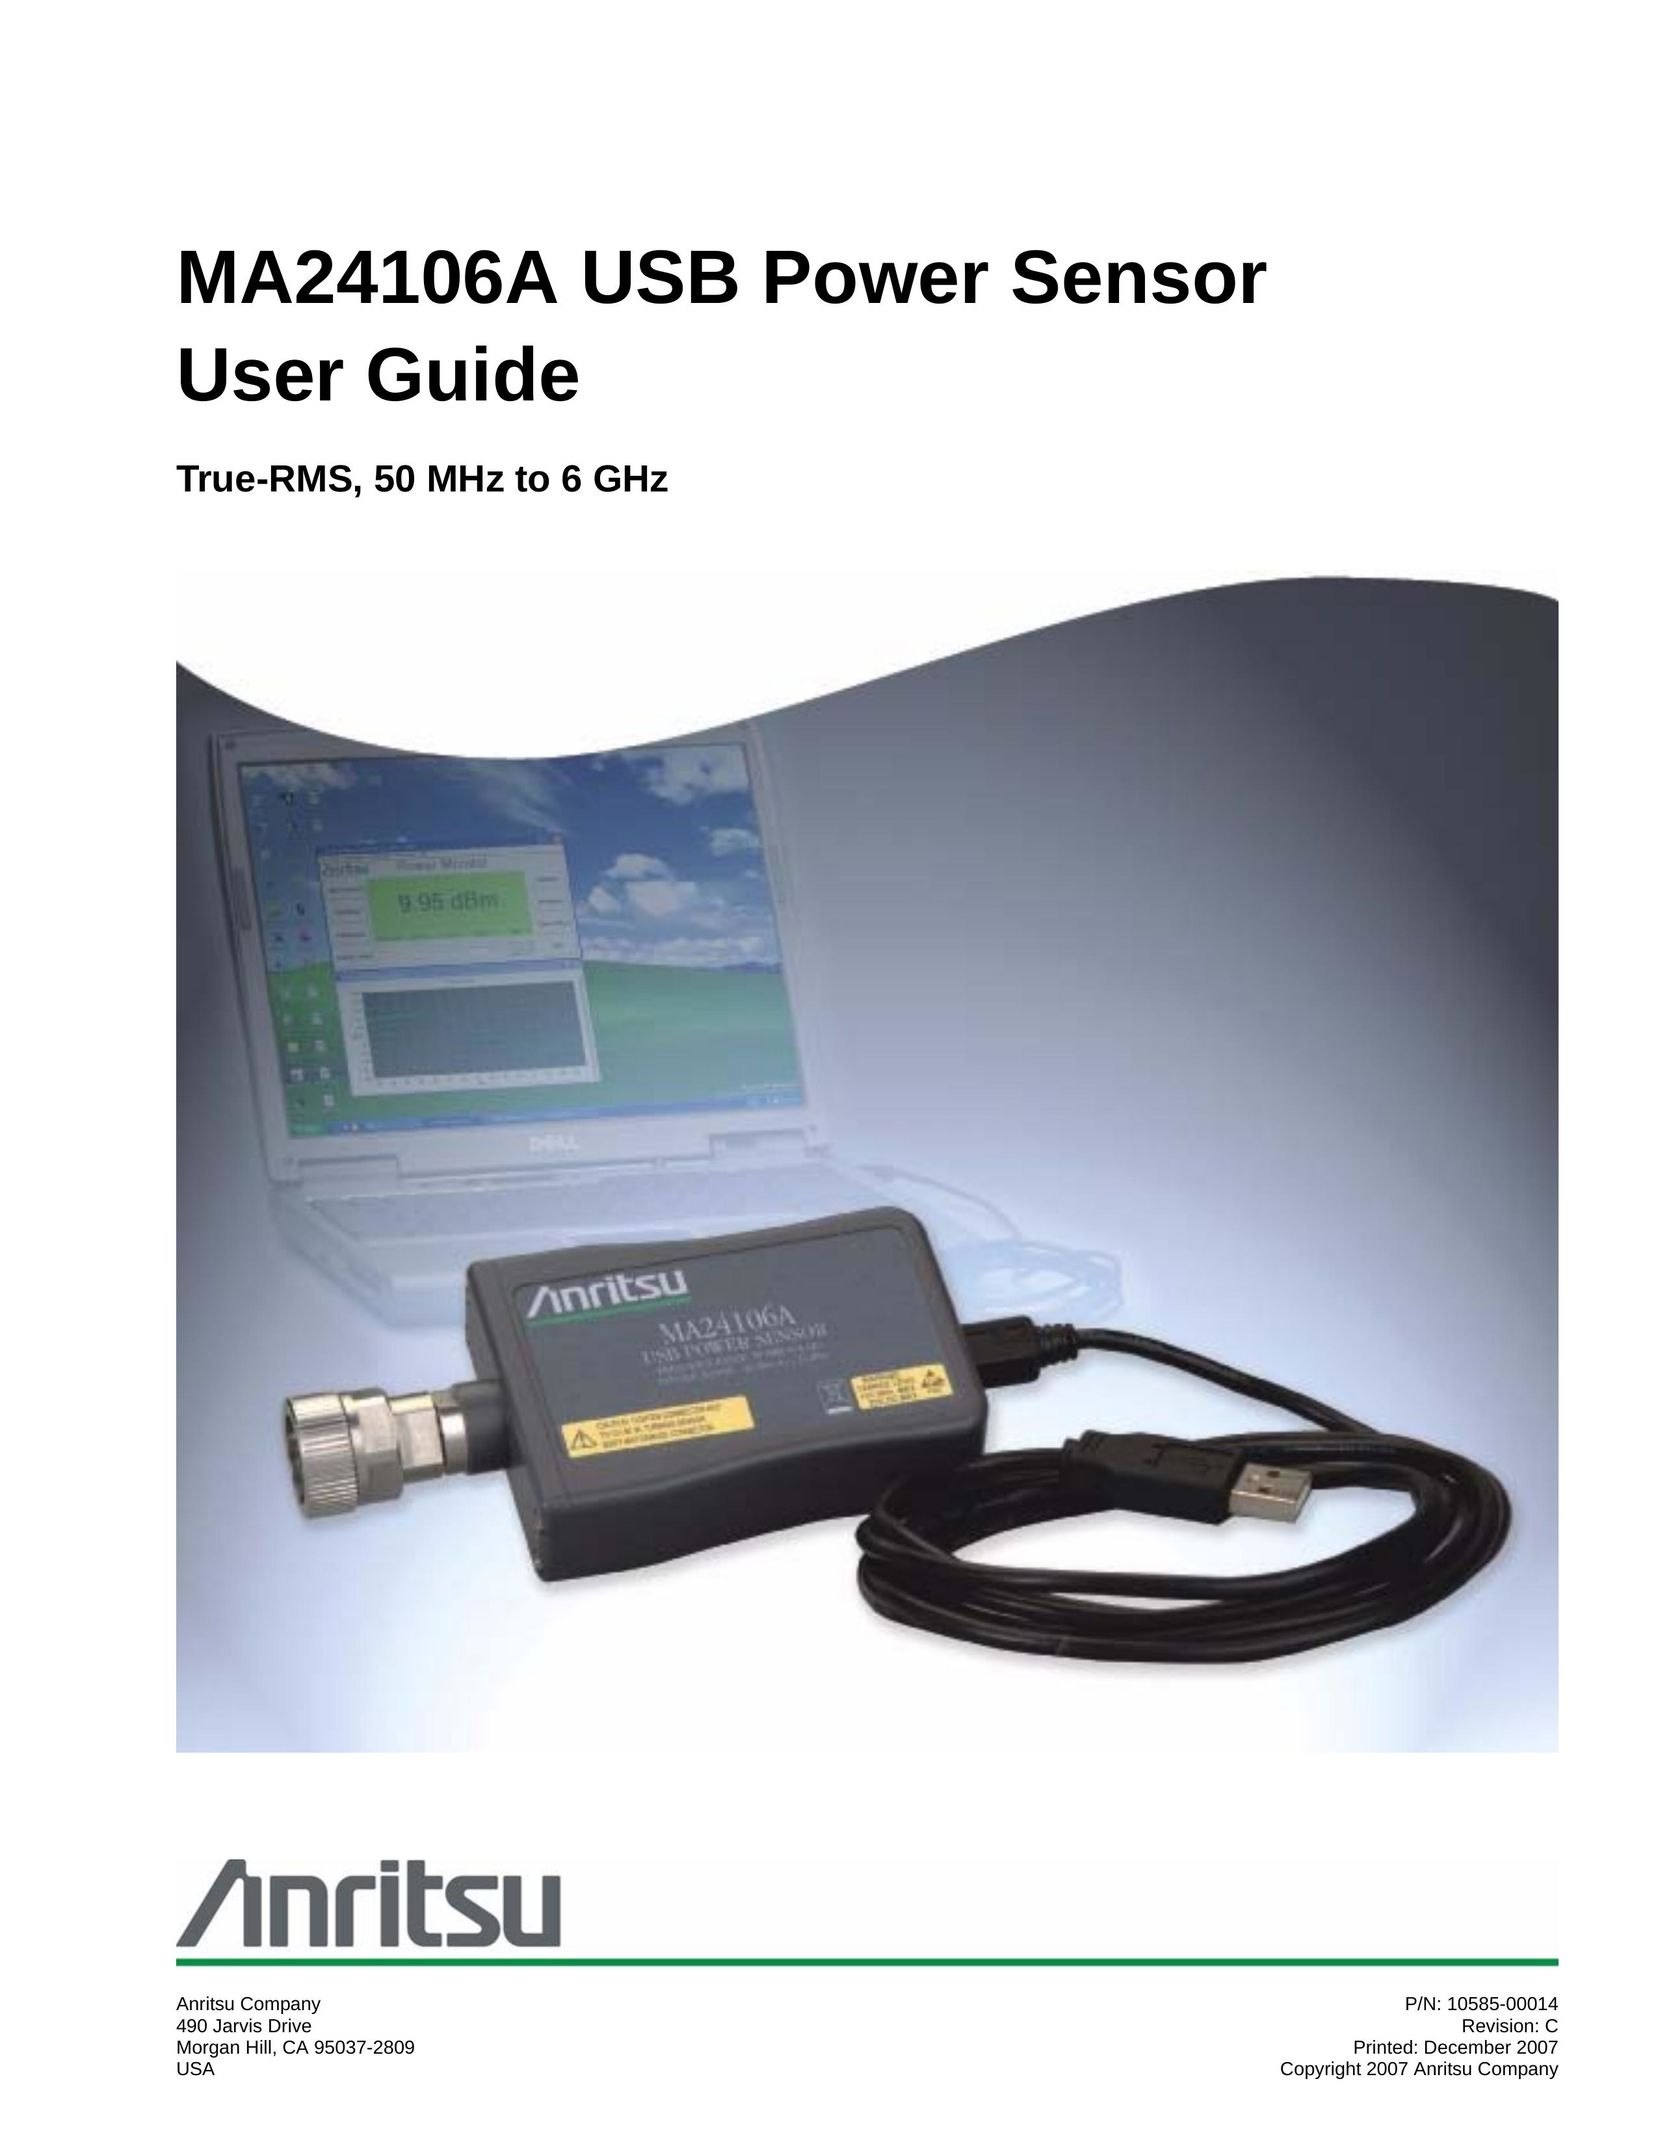 Anritsu MA24106A Network Router User Manual